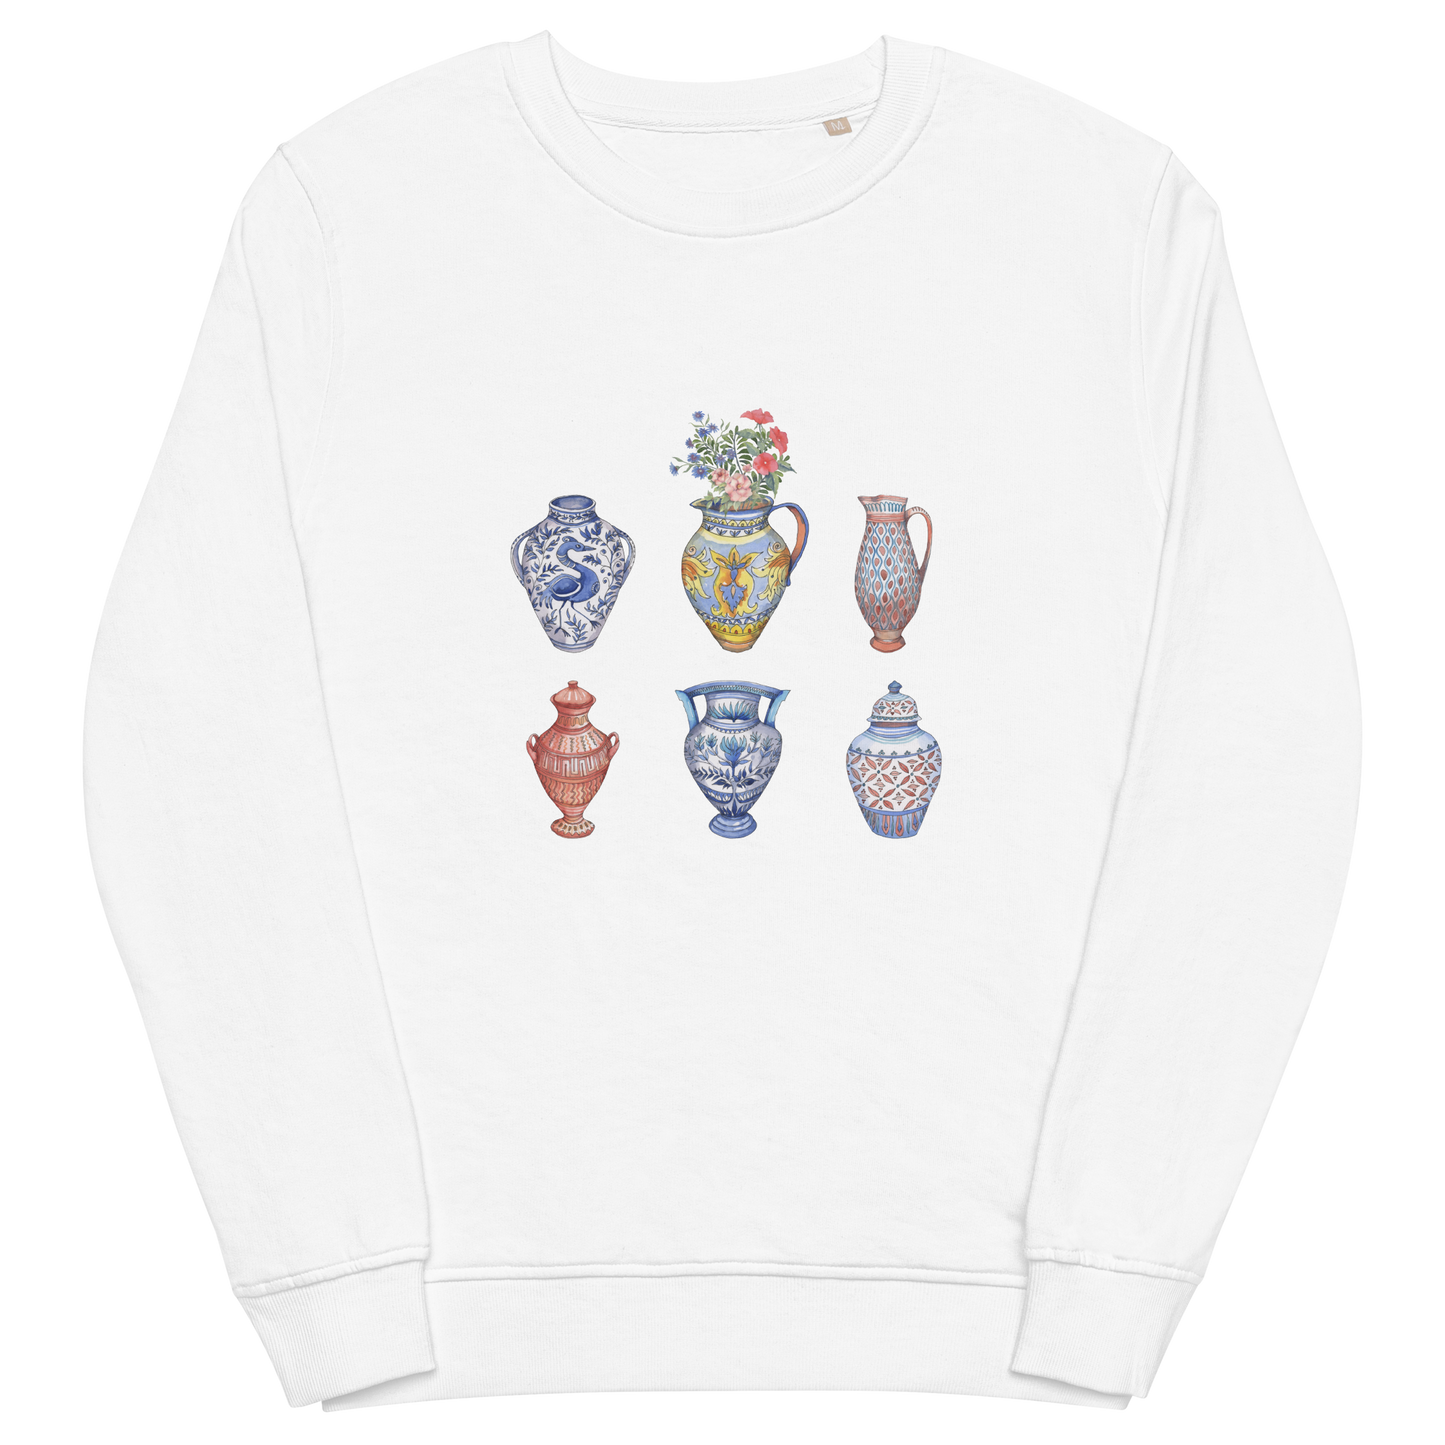 White Organic Cotton Vase Sweatshirt featuring a chic vase graphic on the chest - Artsy Graphic Vase Sweatshirts - Boozy Fox